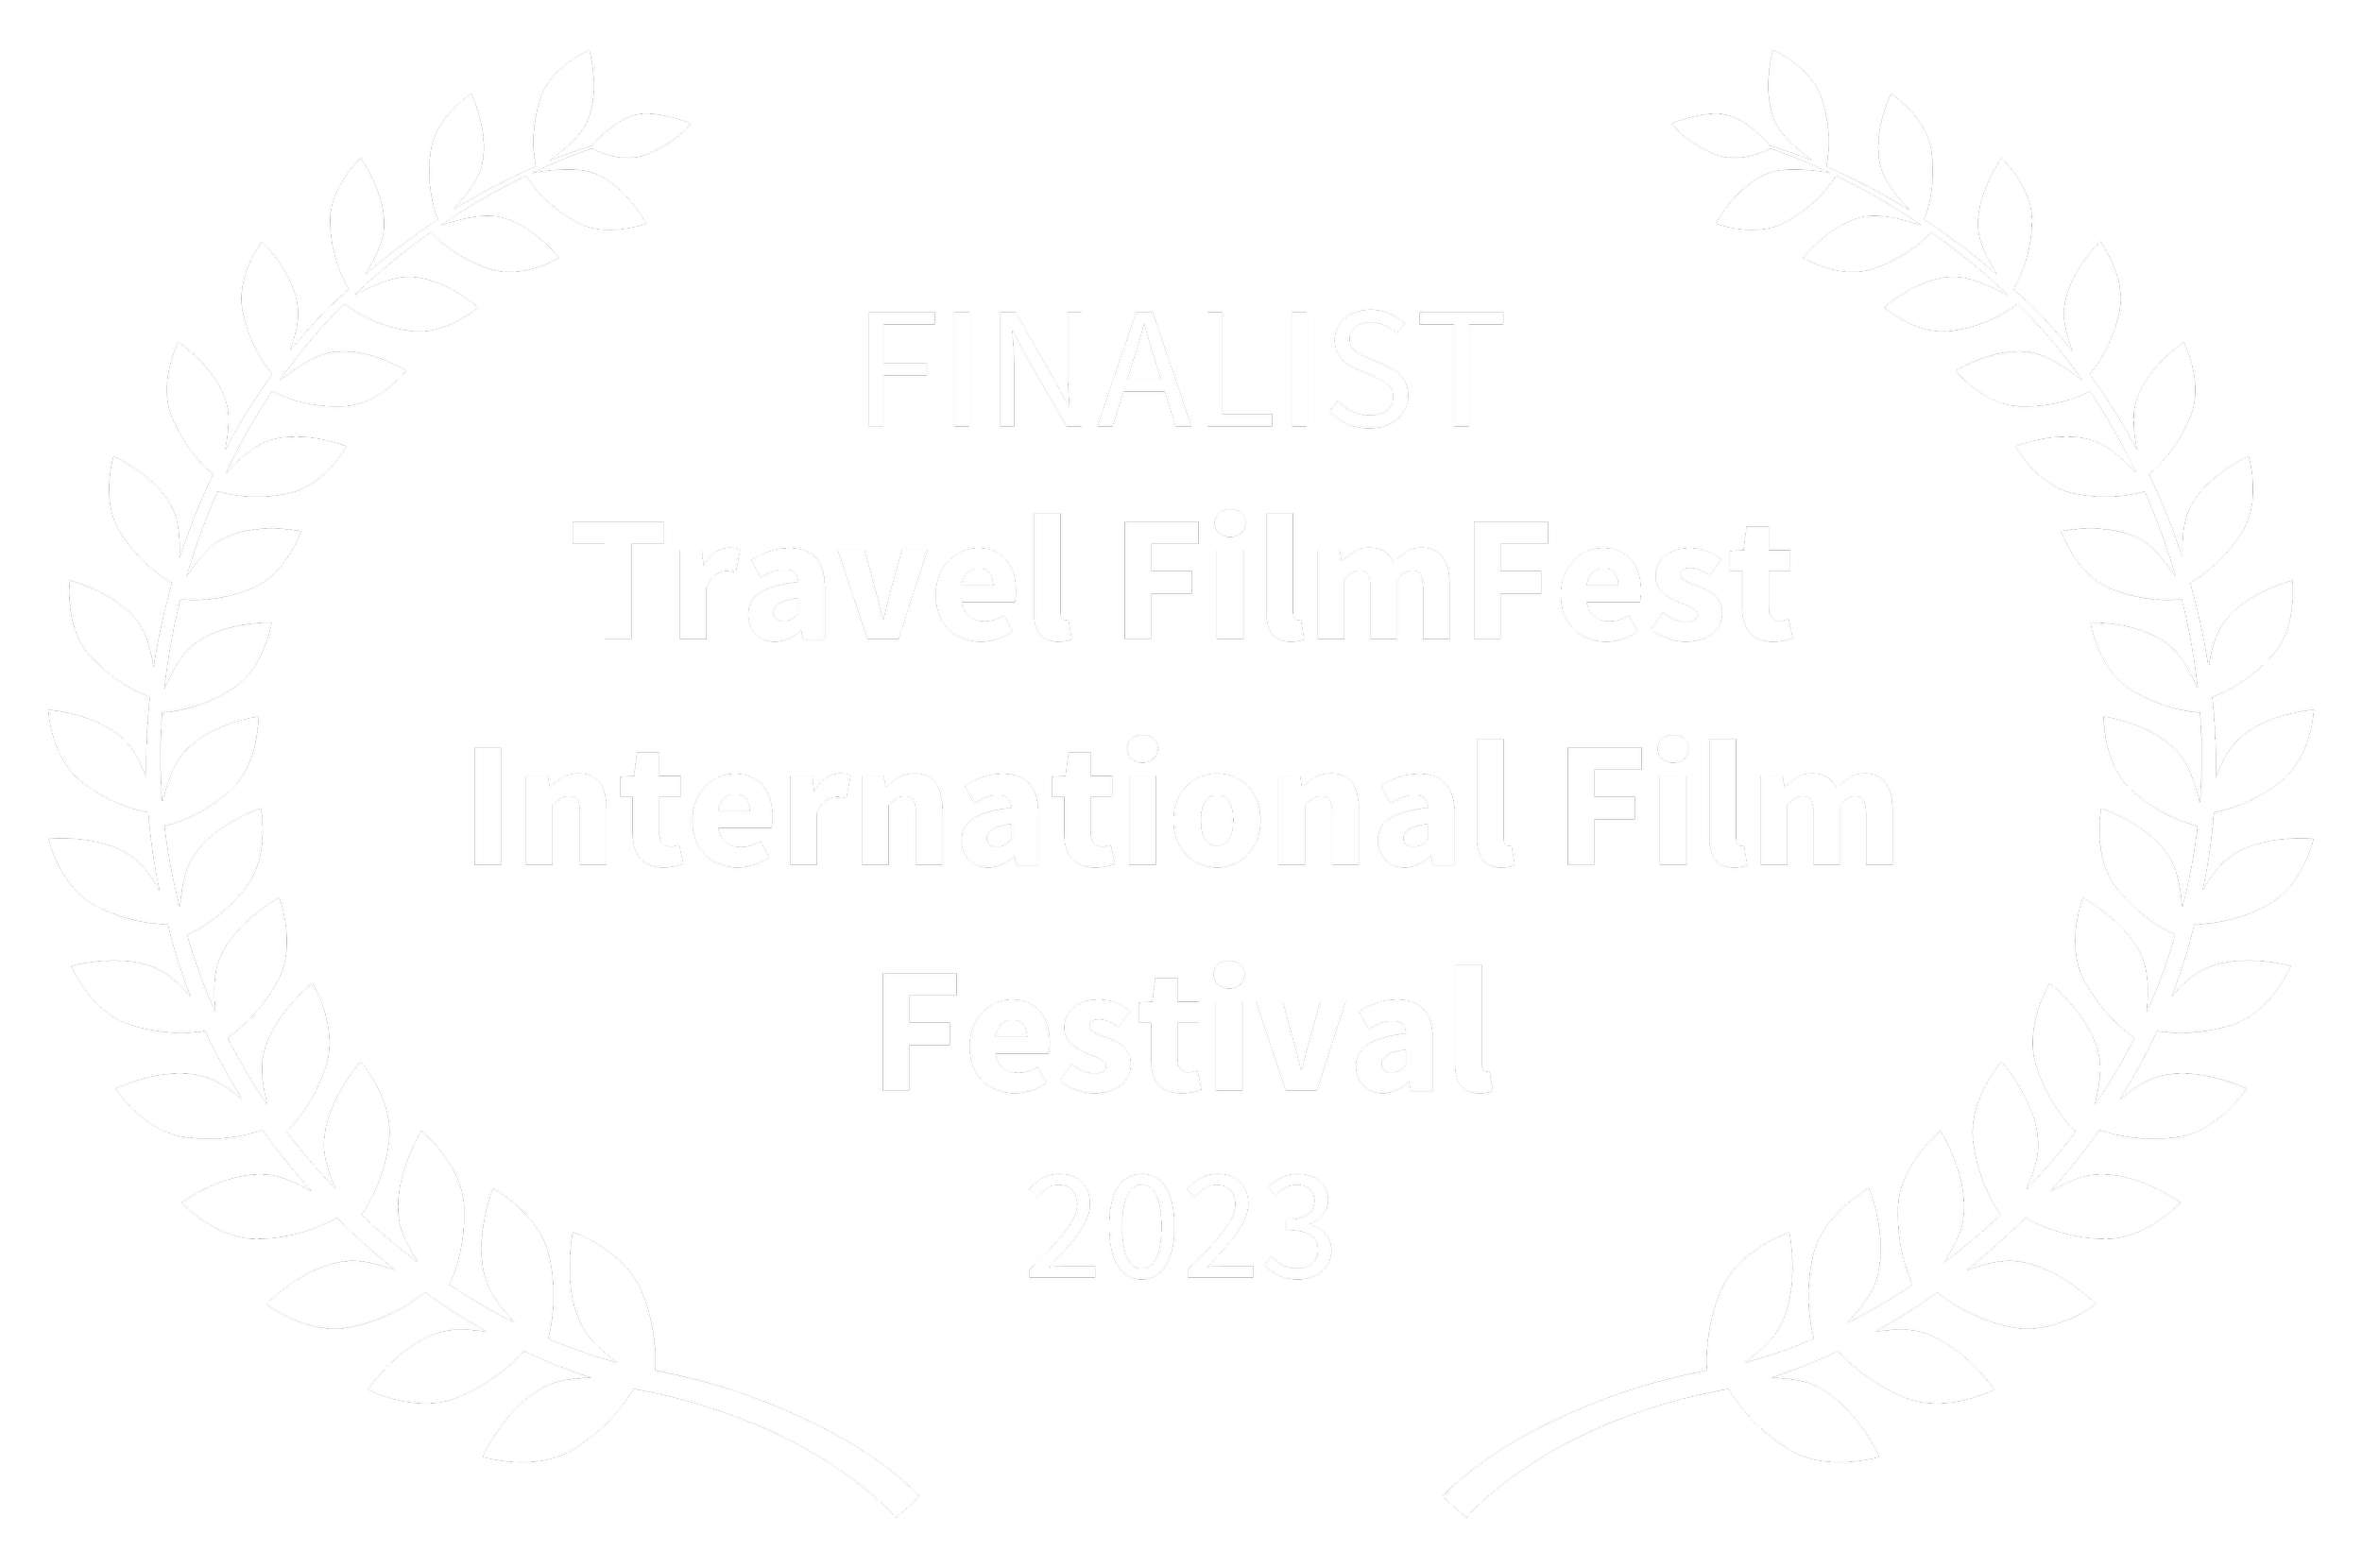 FINALIST-TravelFilmFestInternationalFilmFestival-2023 (1).png